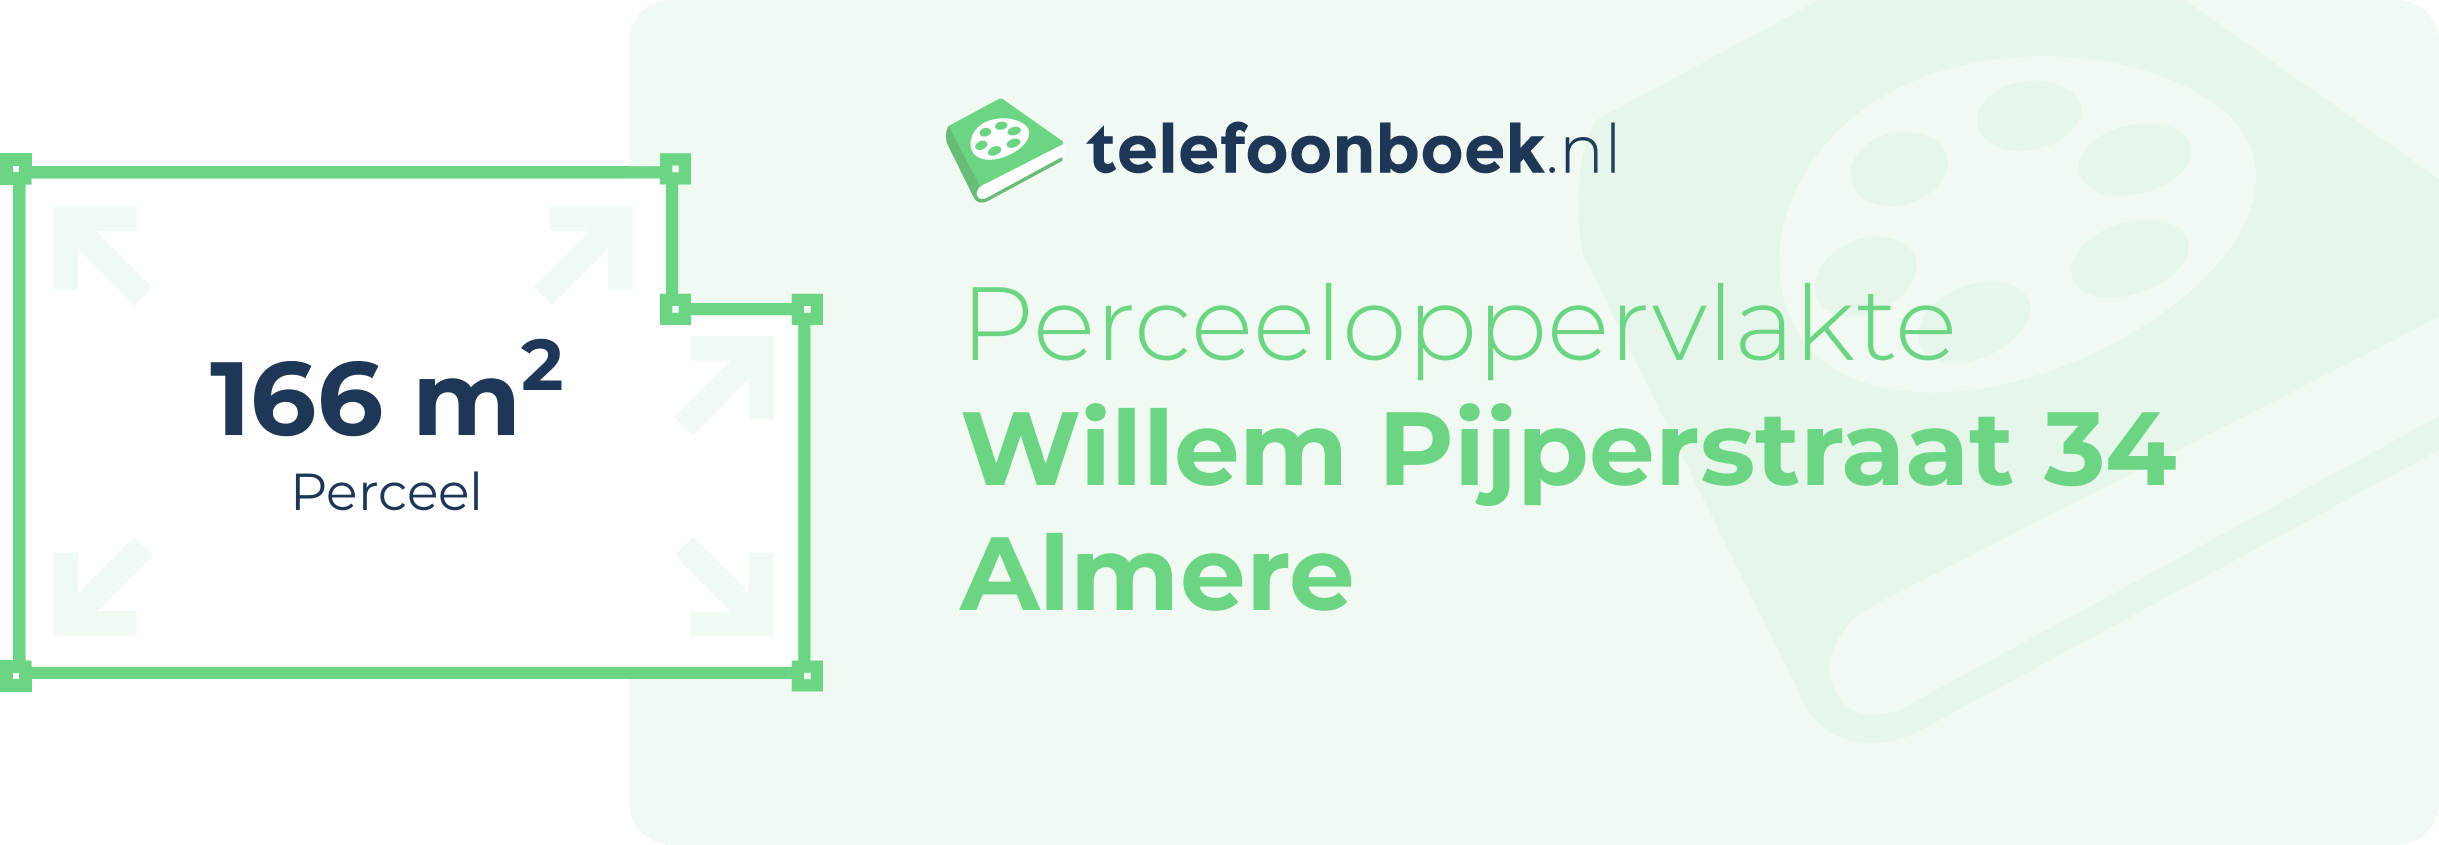 Perceeloppervlakte Willem Pijperstraat 34 Almere